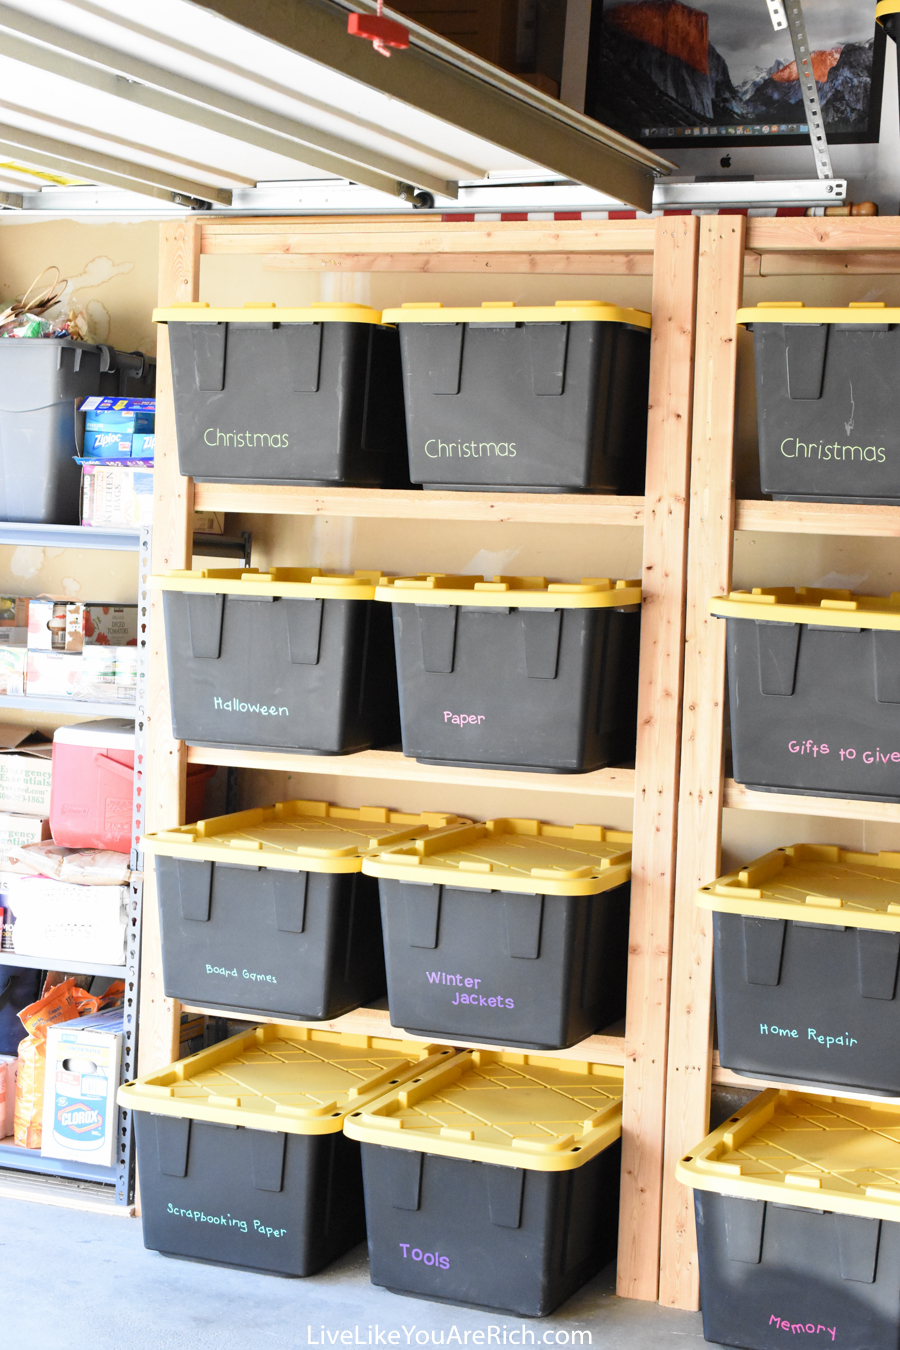 How To Make Wood Storage Shelves Live, Wooden Storage Bin Shelves